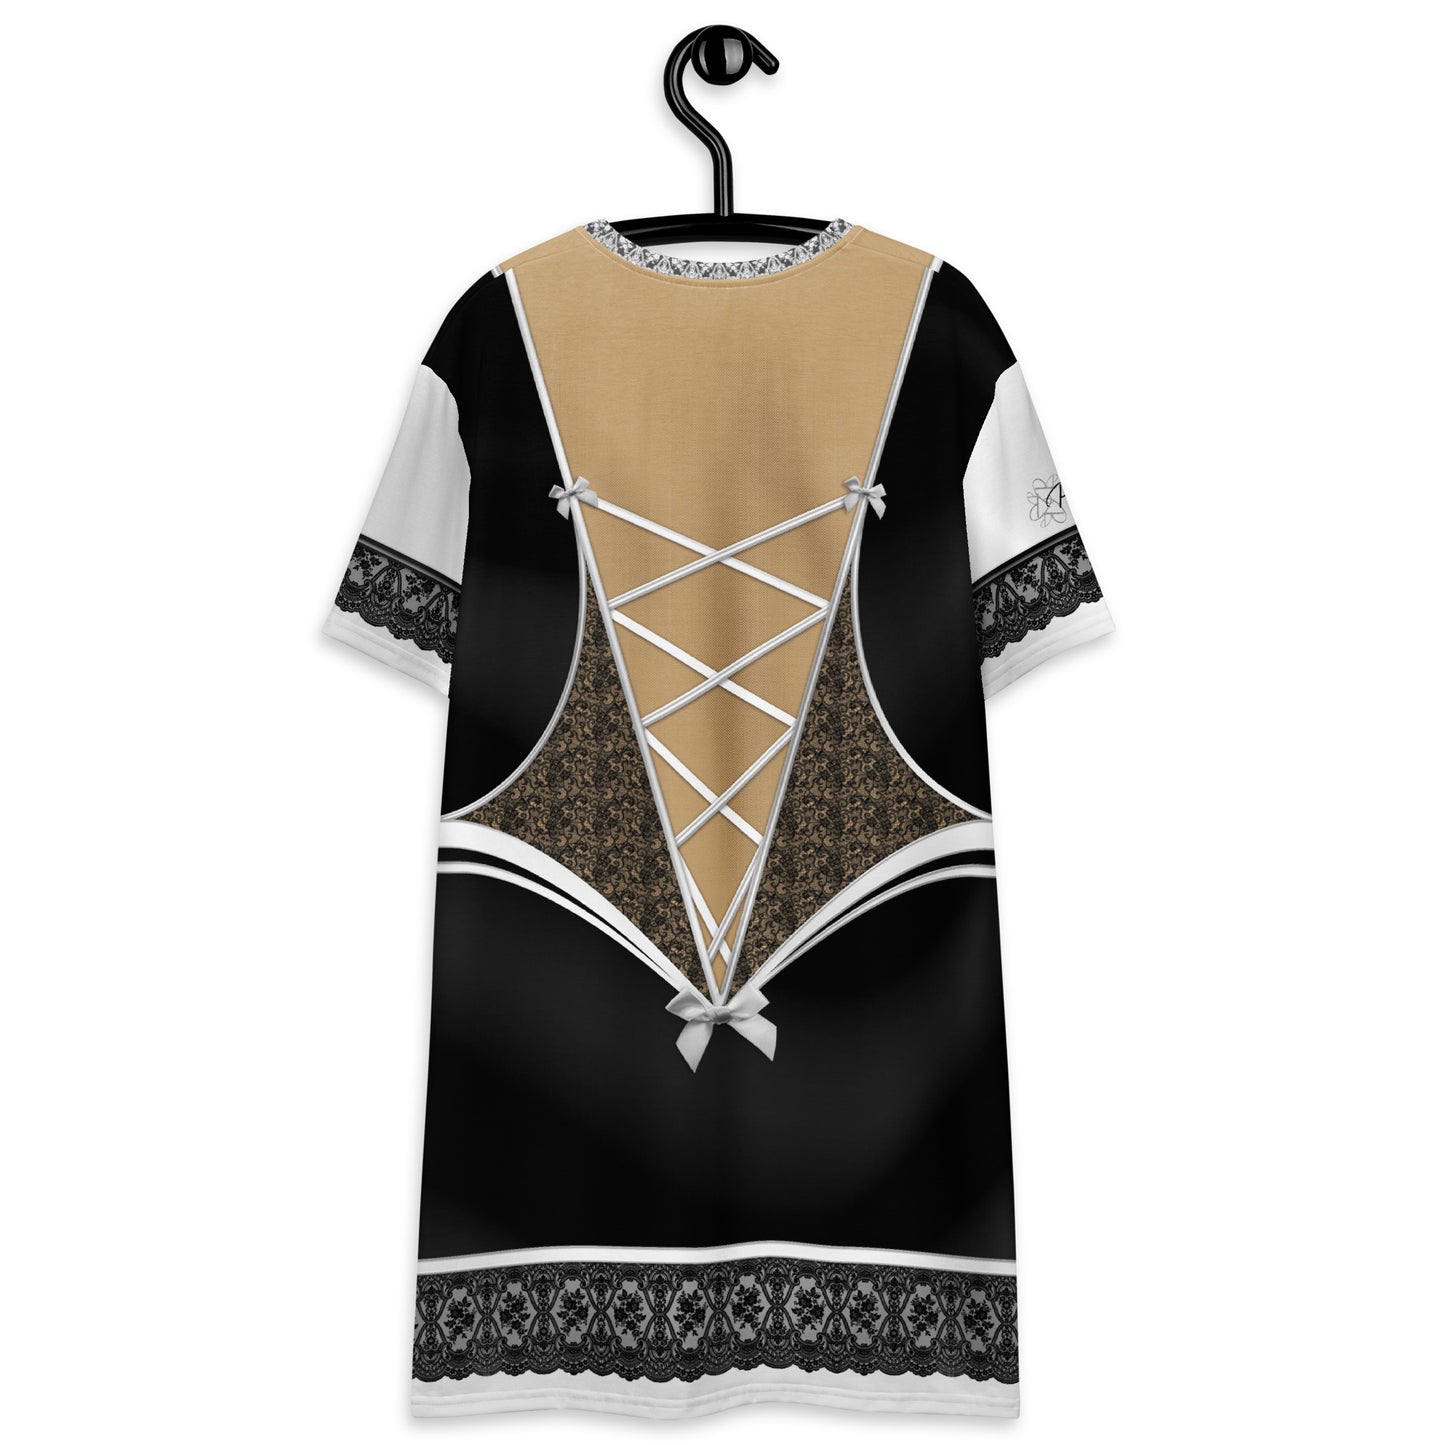 Pajamgeries T-shirt Dress - French Maid - Mediterranean